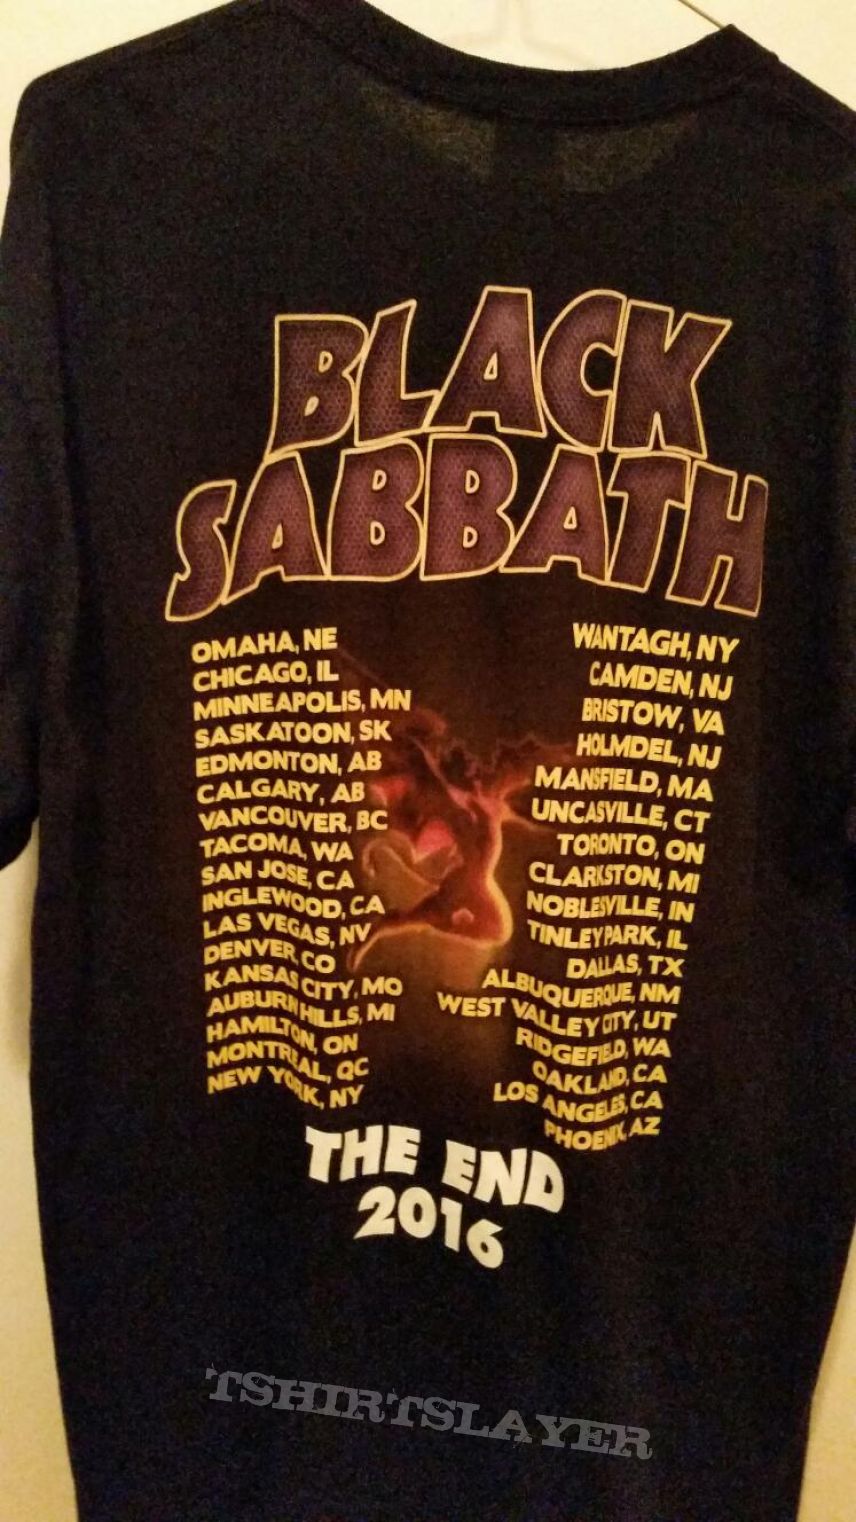 Black Sabbath- The End 2016 tour shirt